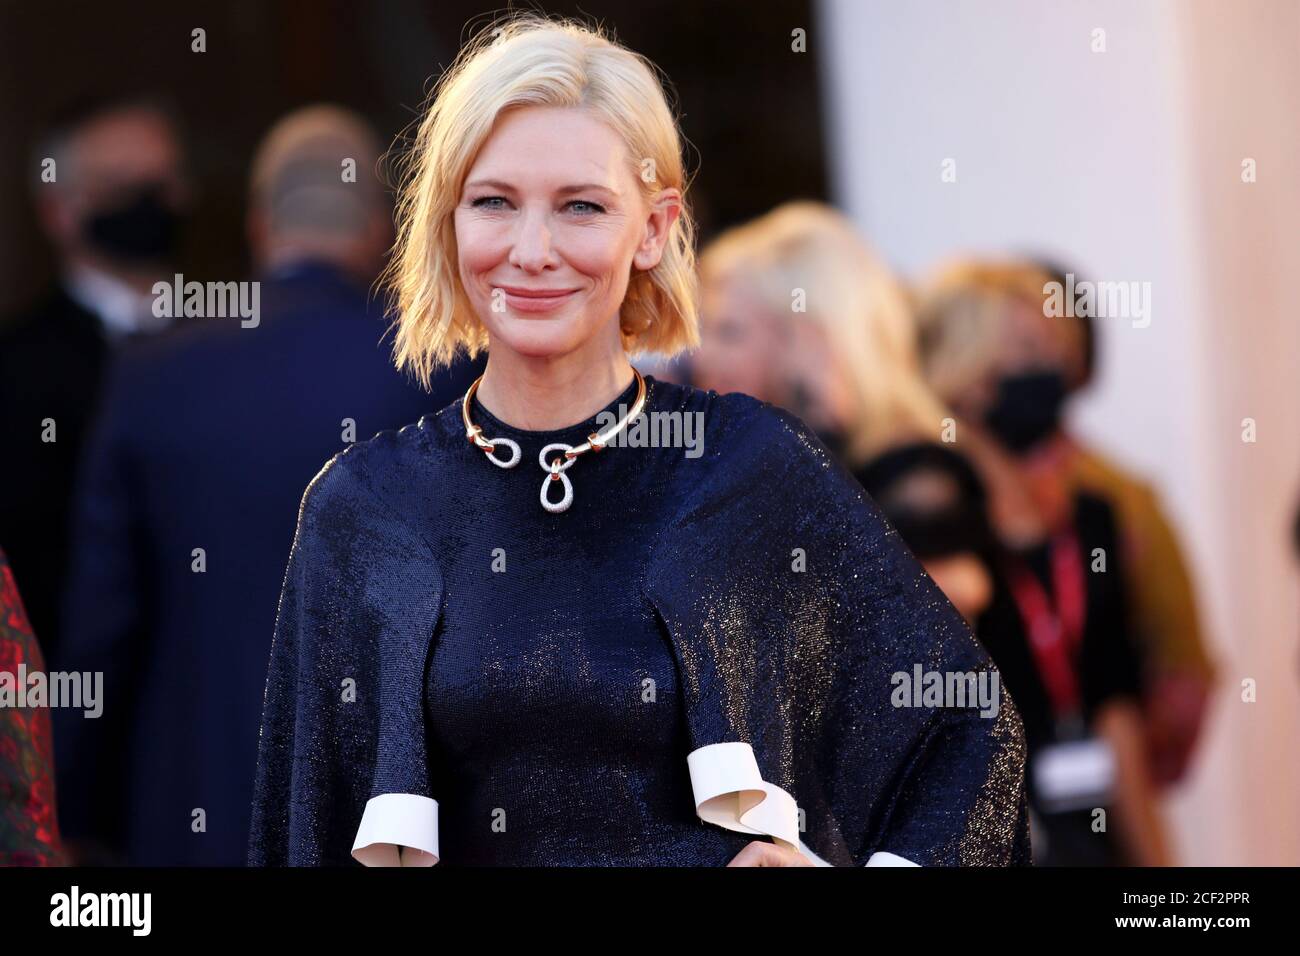 Italien, Lido di Venezia, 02. September 2020 : Cate Blanchett, Jurypräsidentin des 77. Internationalen Filmfestivals in Venedig Foto © Ottavia Da Re/Sintesi/Alamy Live News Stockfoto